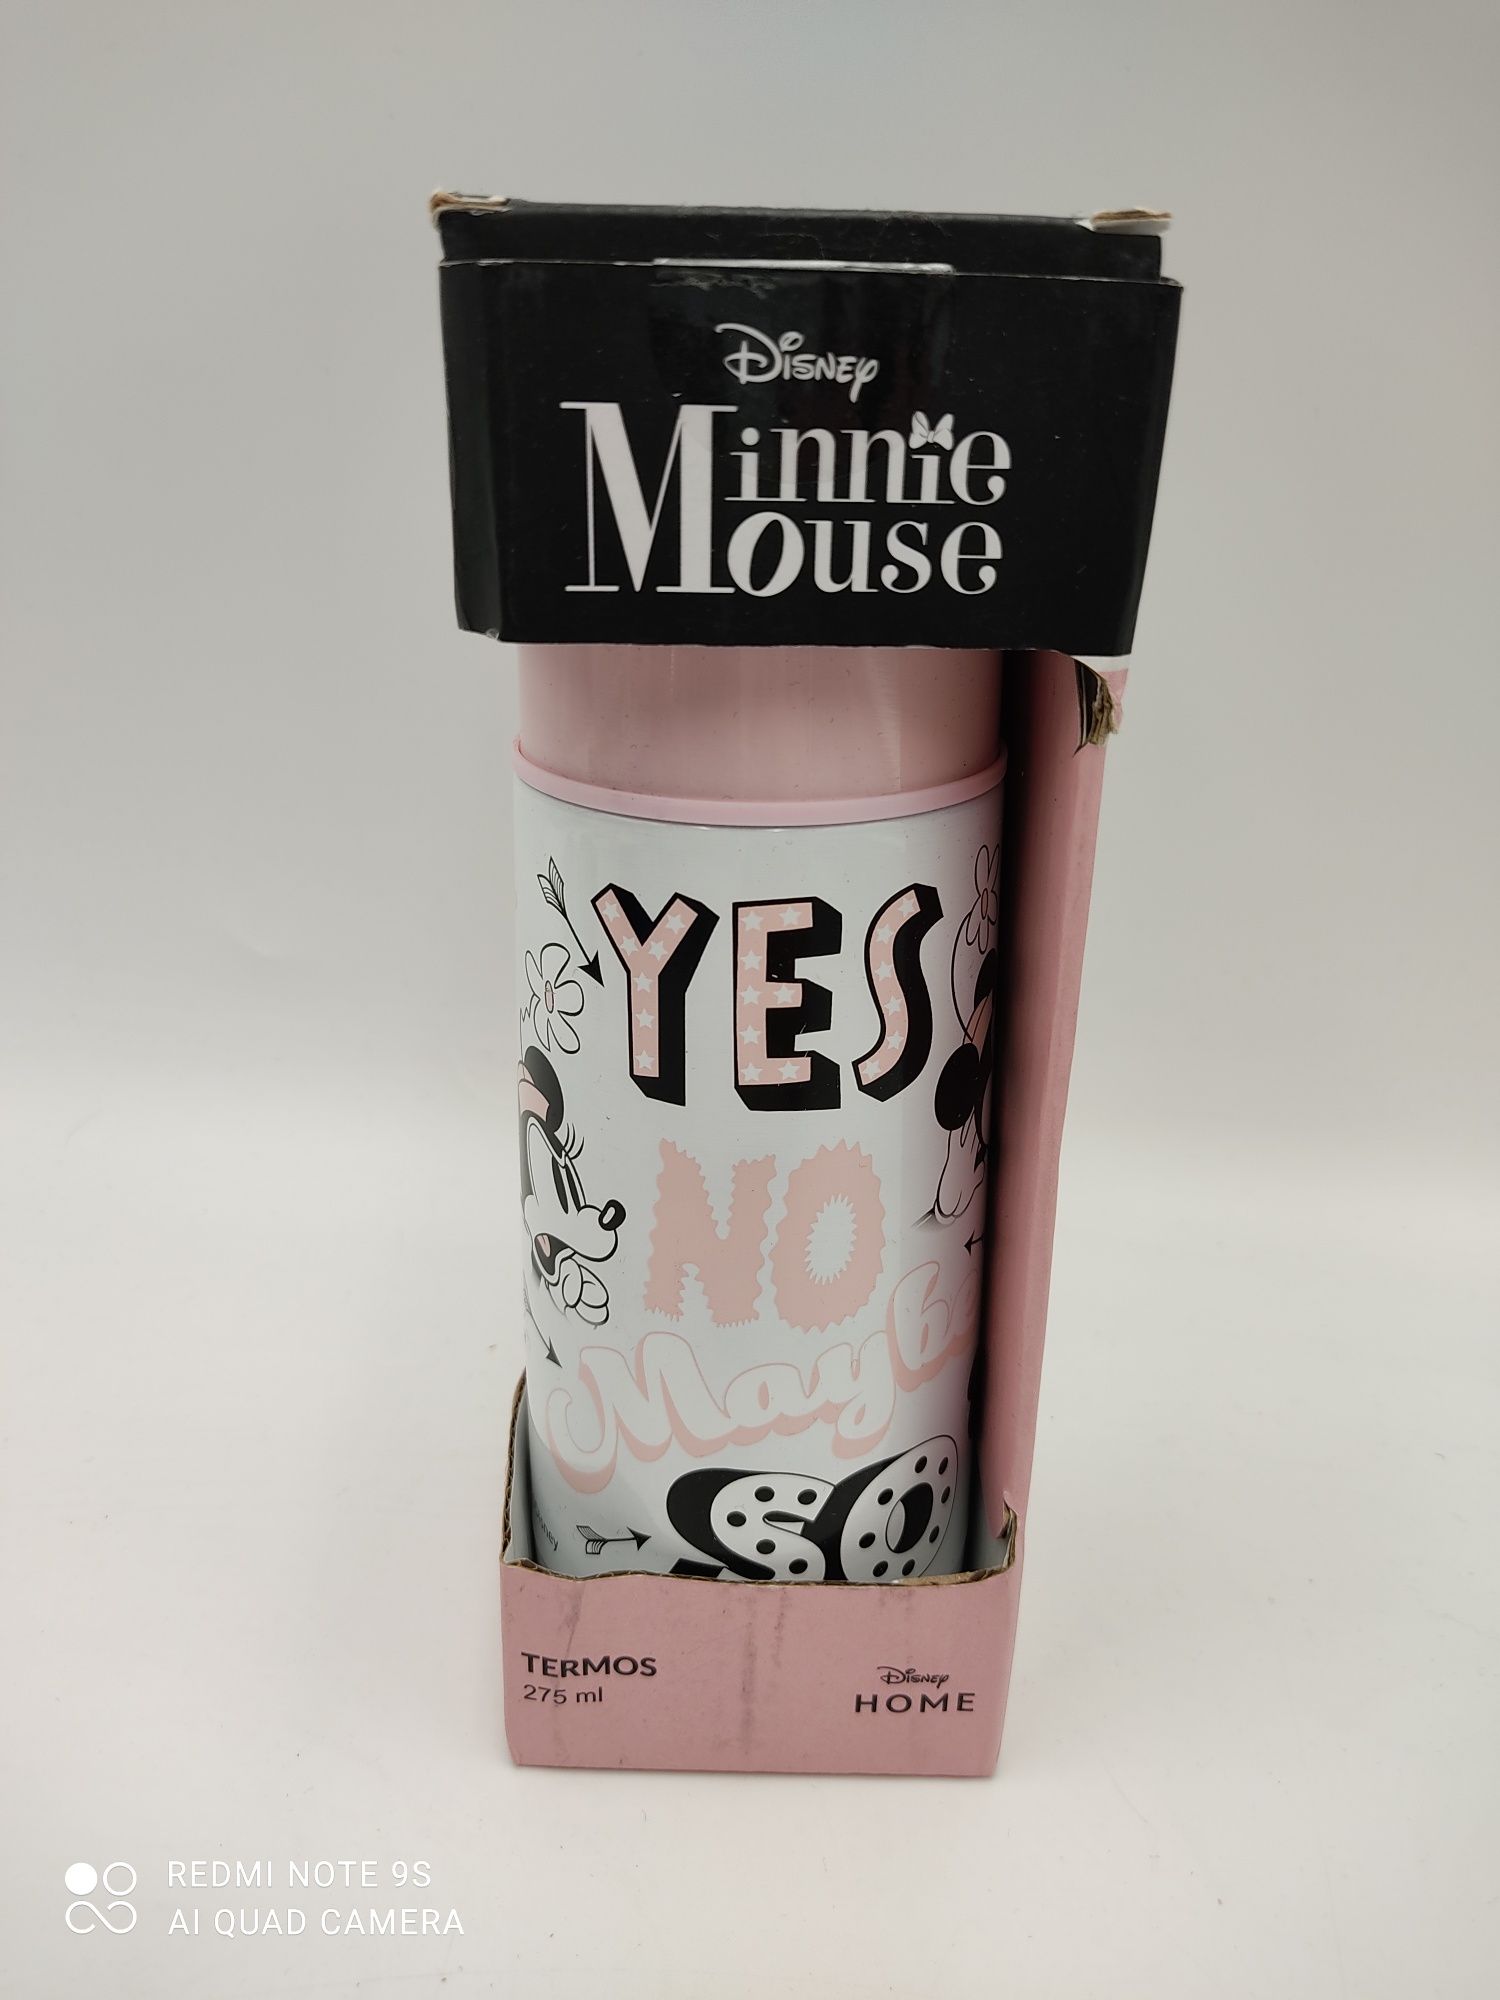 Termos Minnie Mouse 275 ml